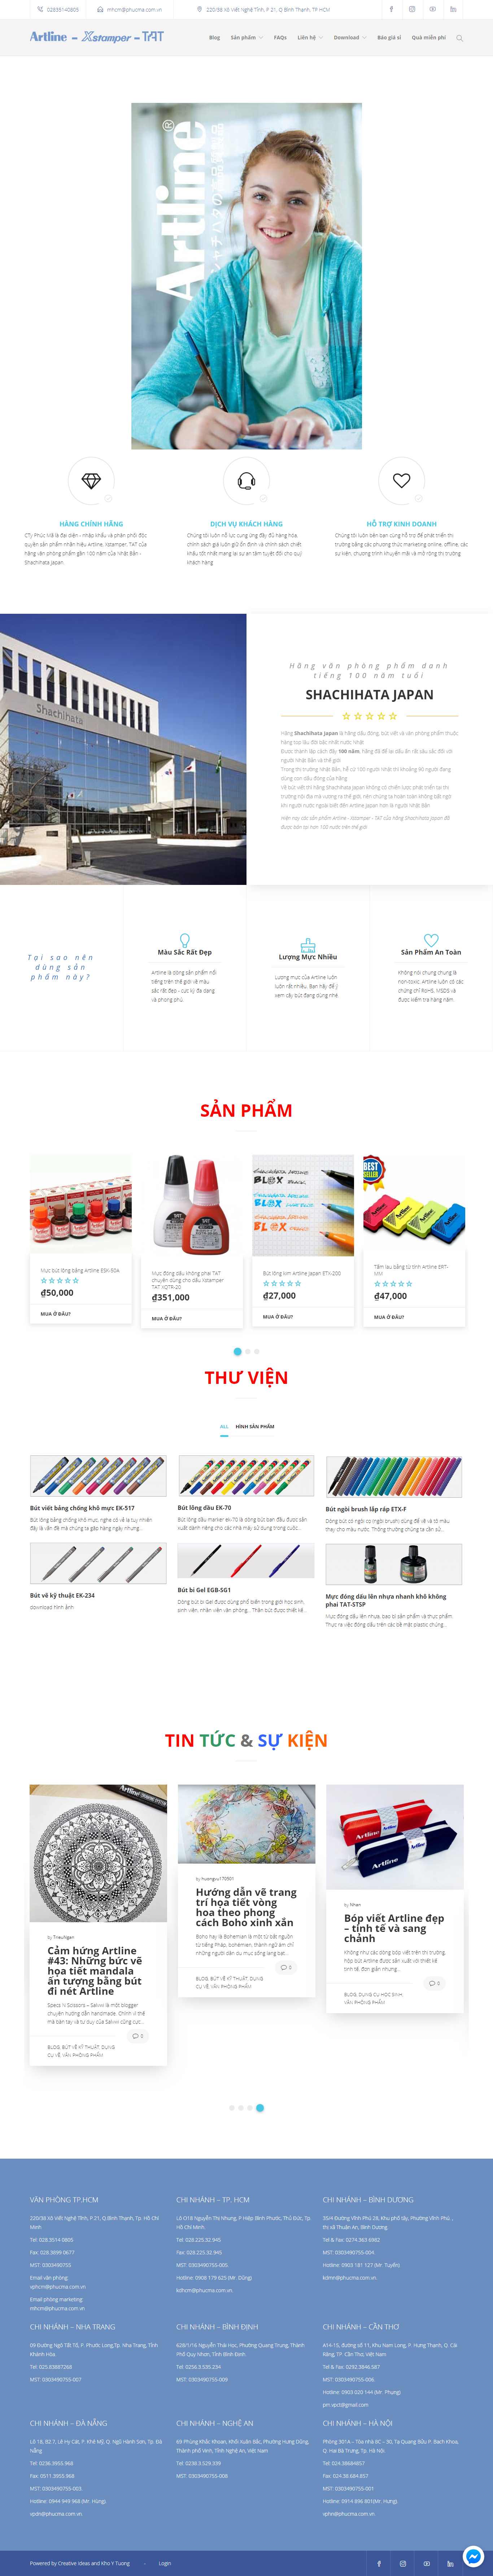 Thiết kế Website phân phối sản phẩm - phucma.com.vn